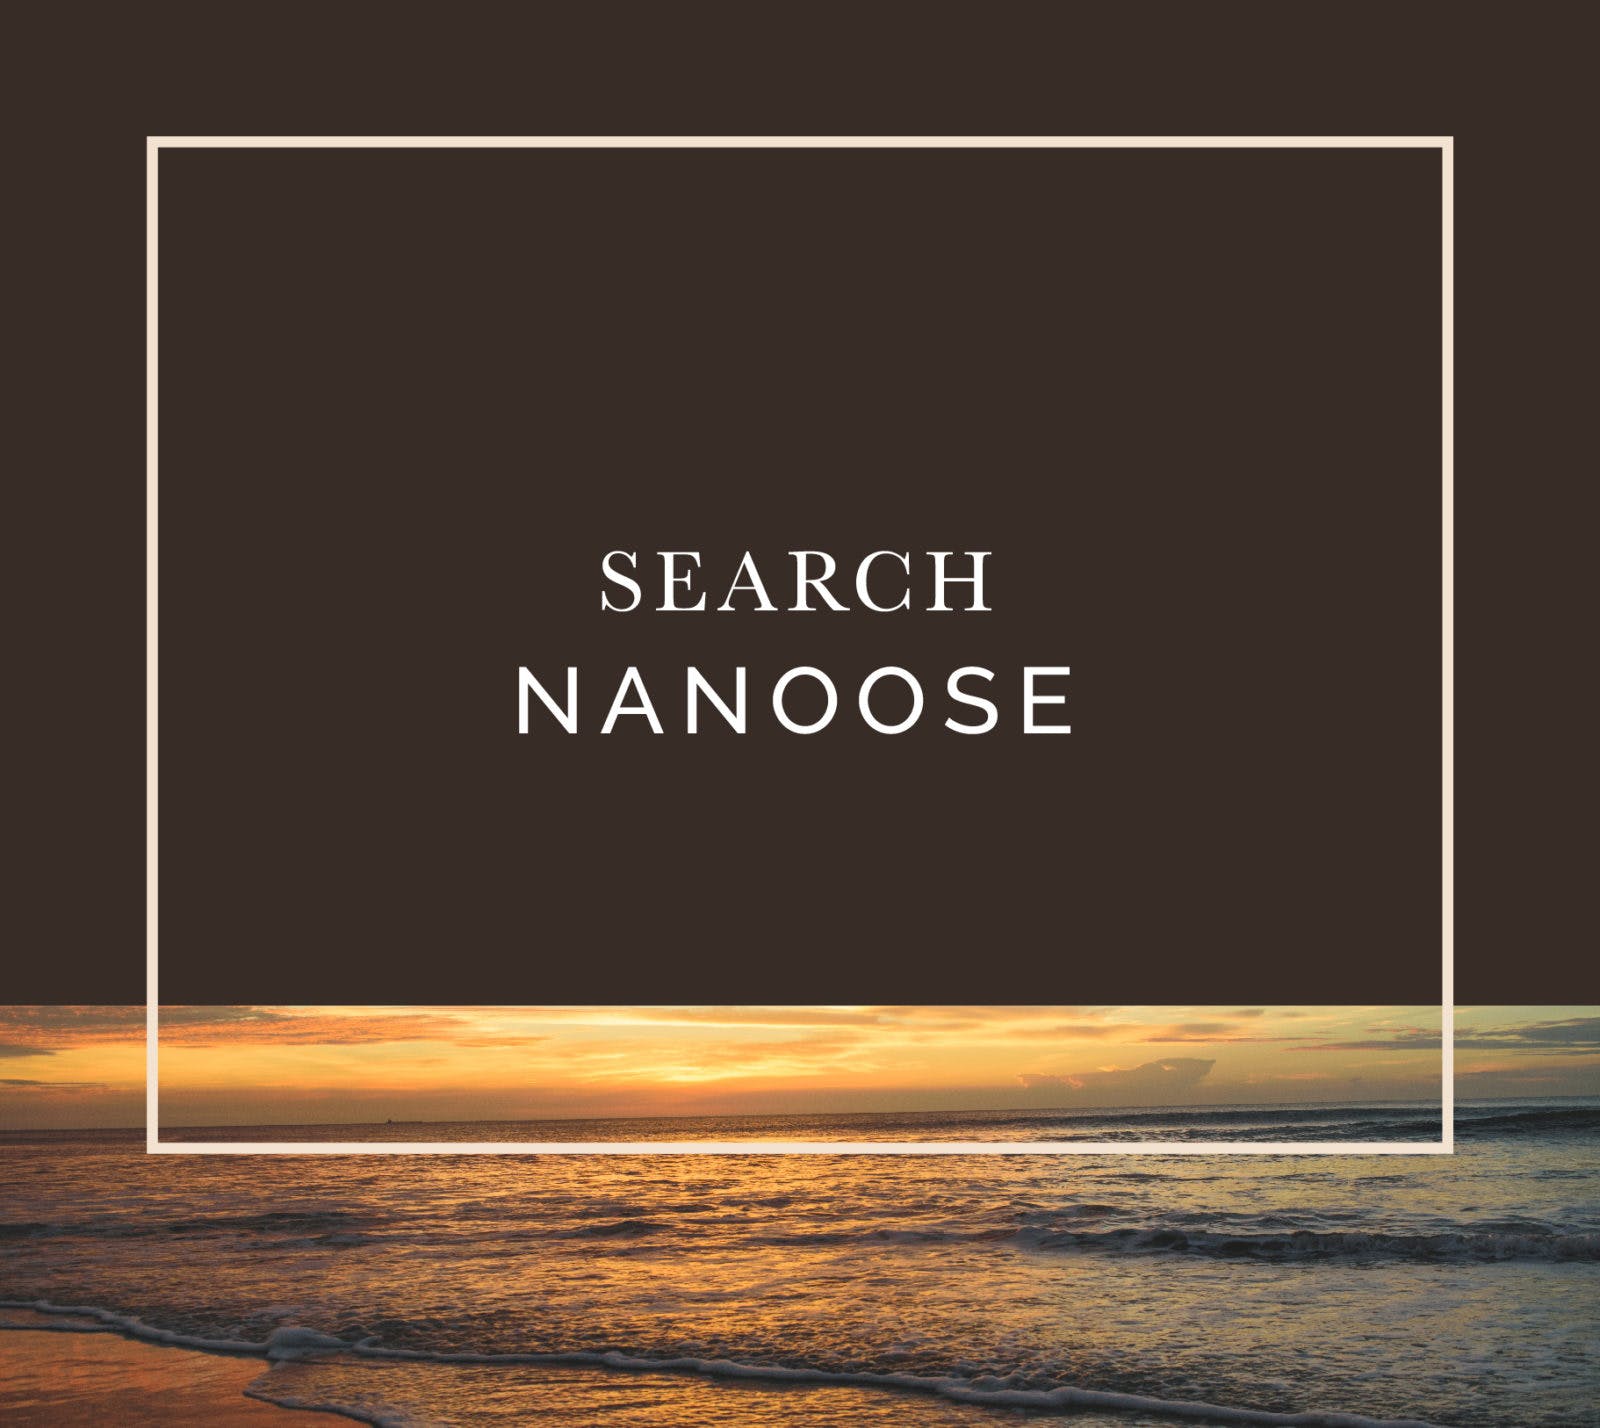 Nanoose